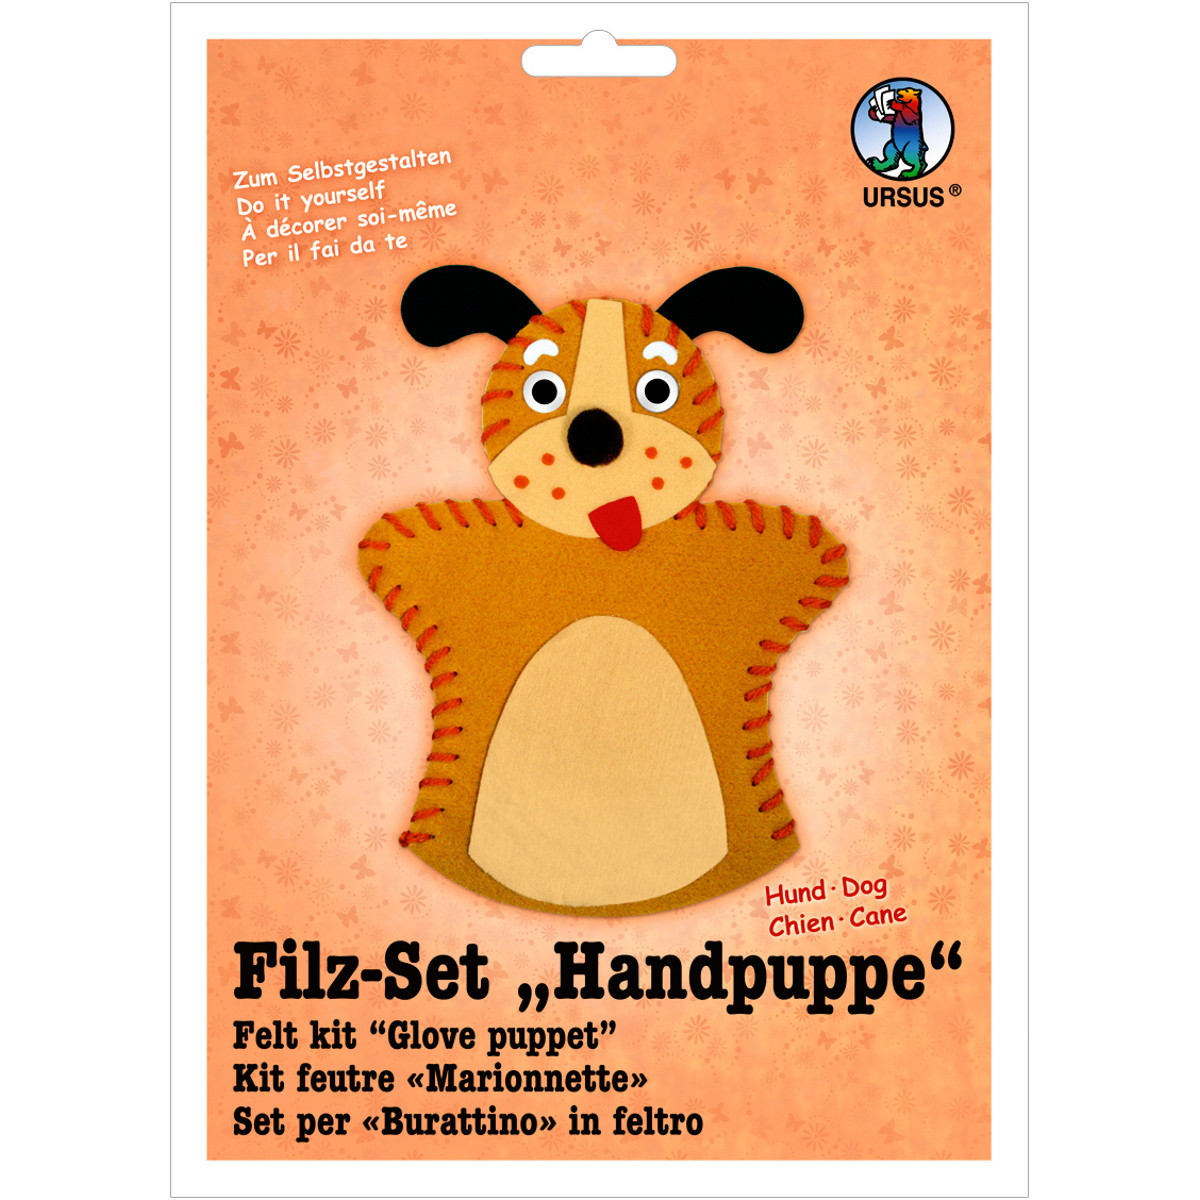 Filz-Set "Handpuppe" Hund